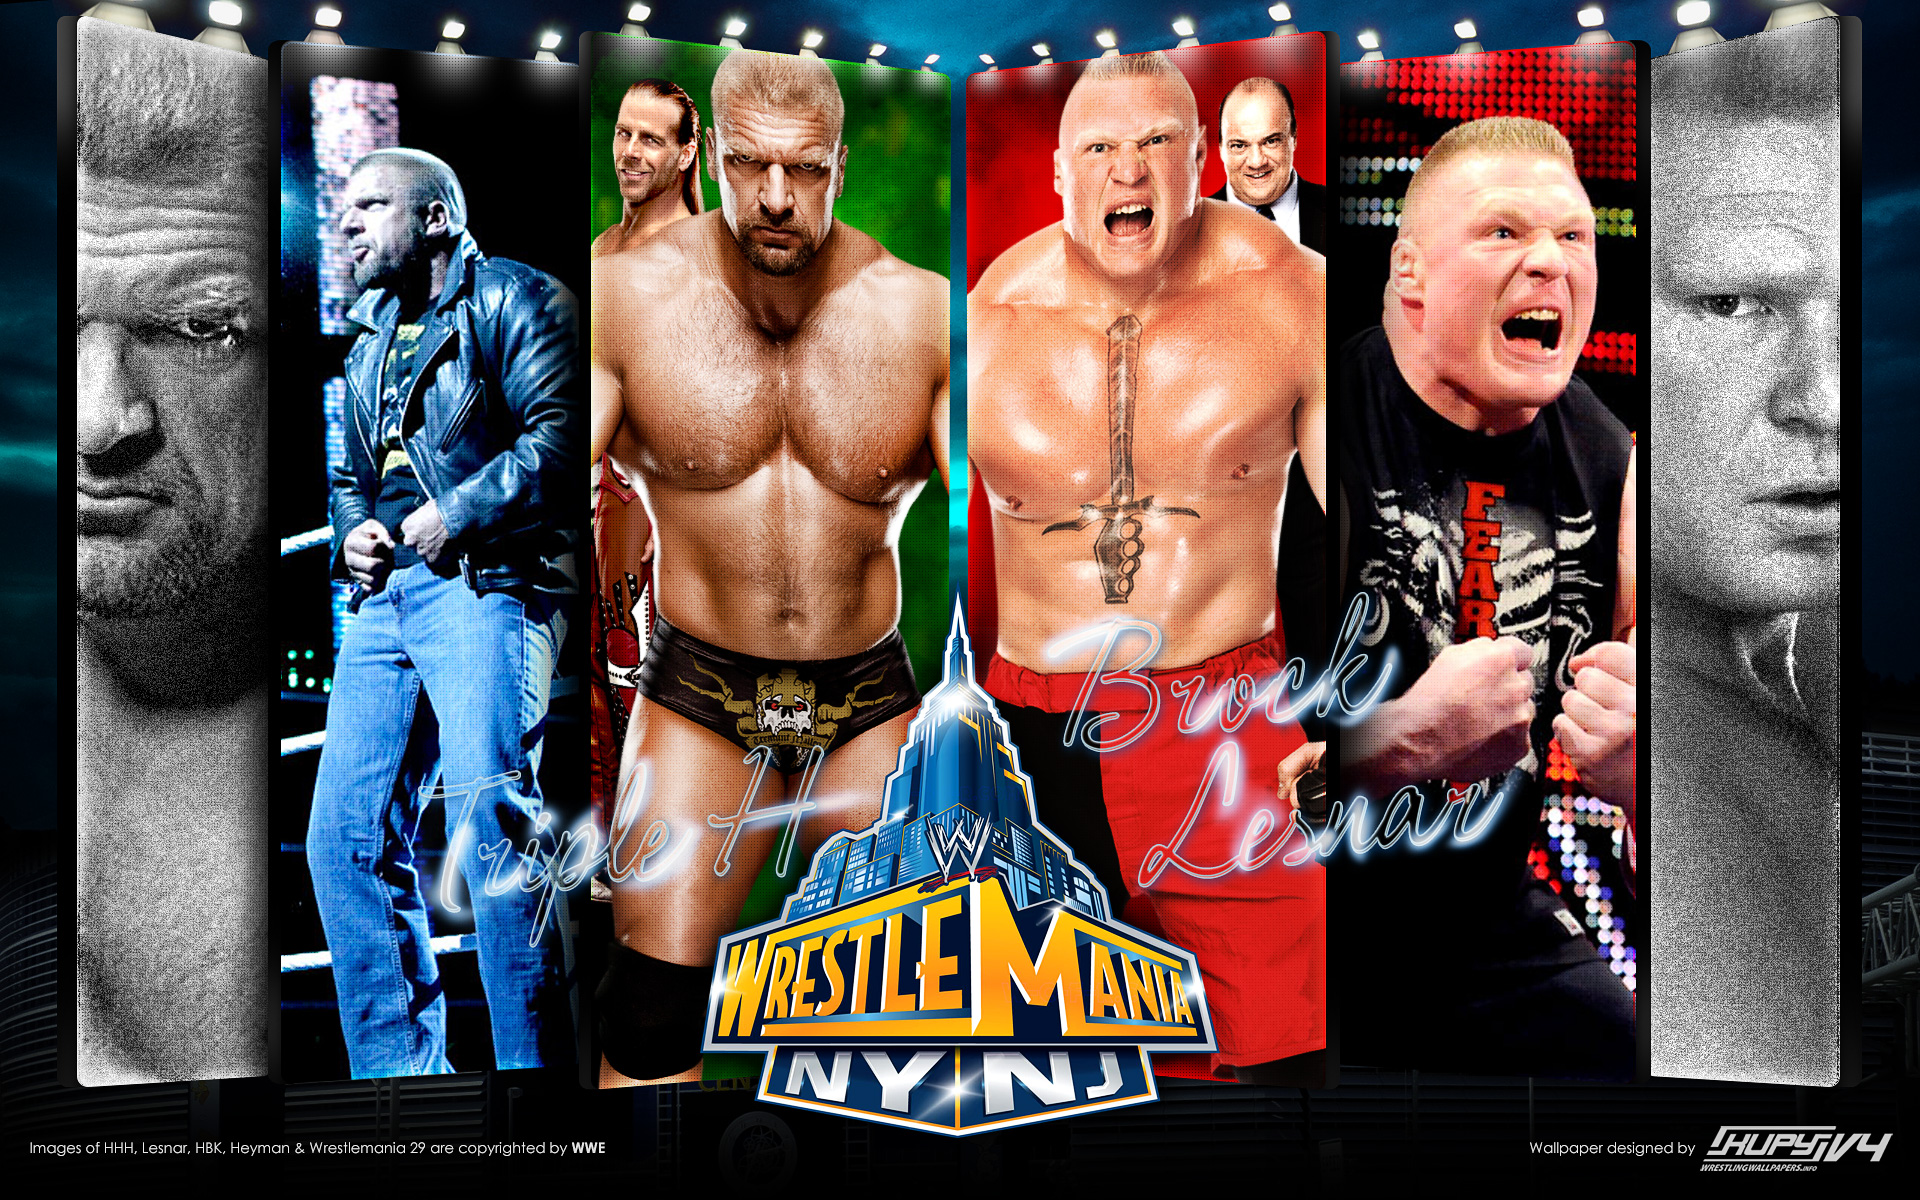 NEW WrestleMania 29 wallpaper: Triple H vs. Brock Lesnar wallpaper! - Kupy  Wrestling Wallpapers